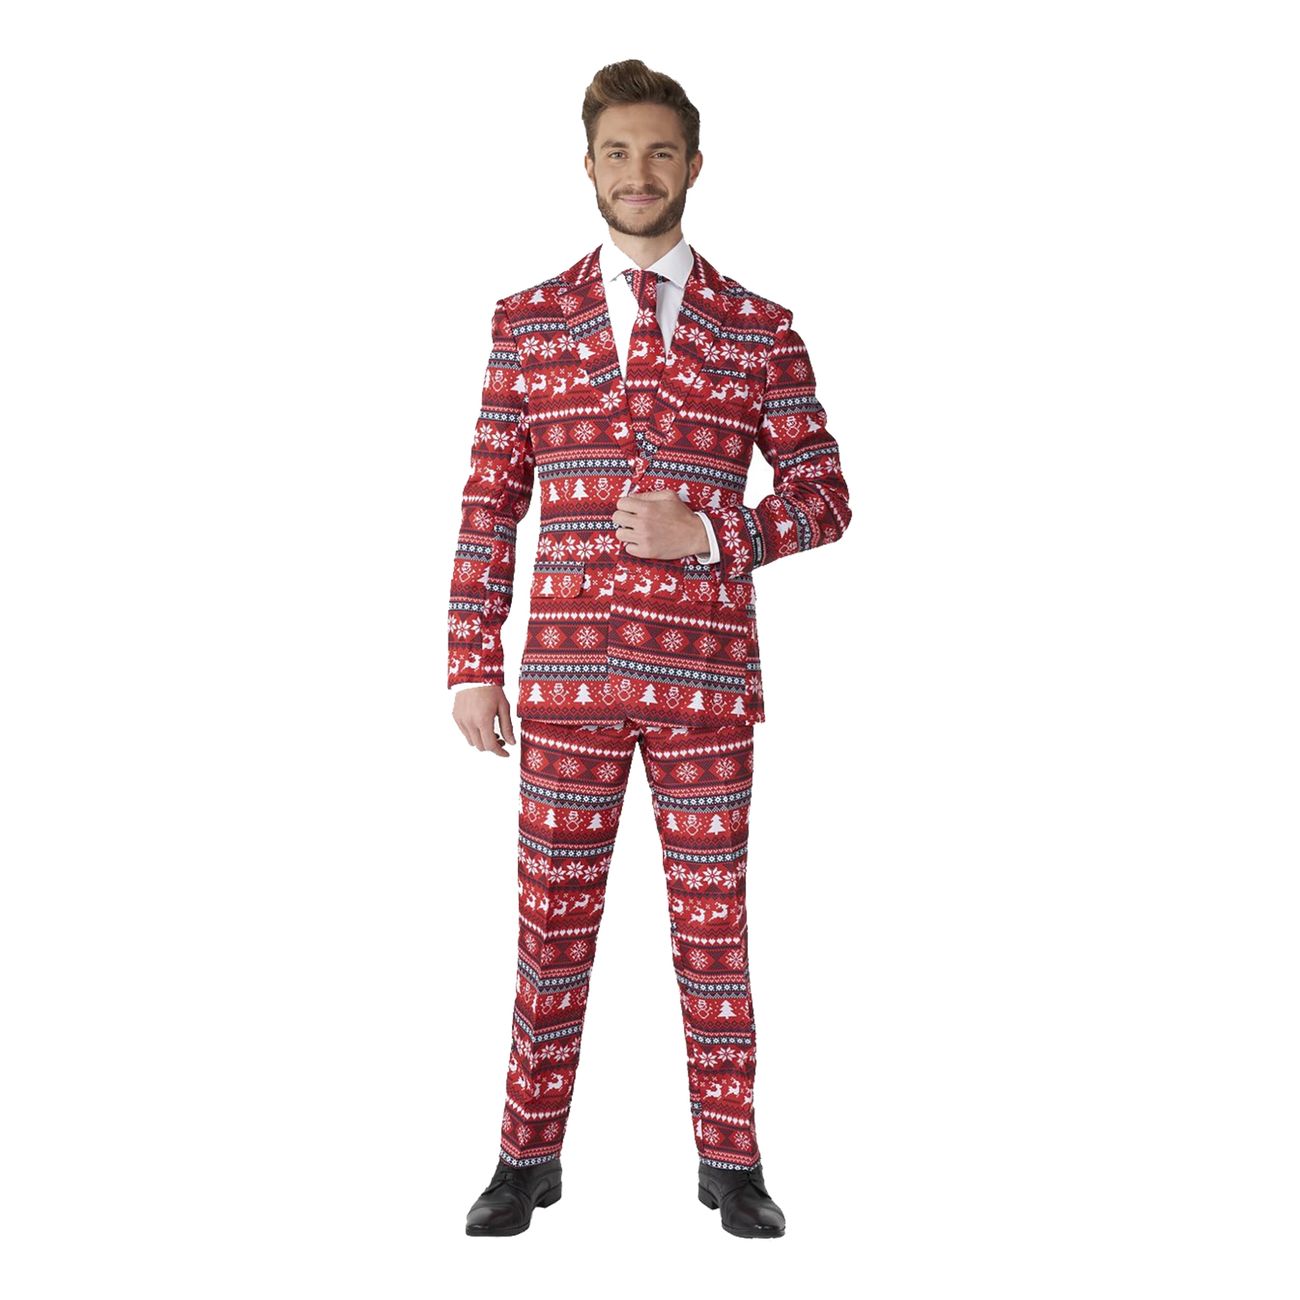 suitmeister-nordic-pixel-rod-kostym-89986-1